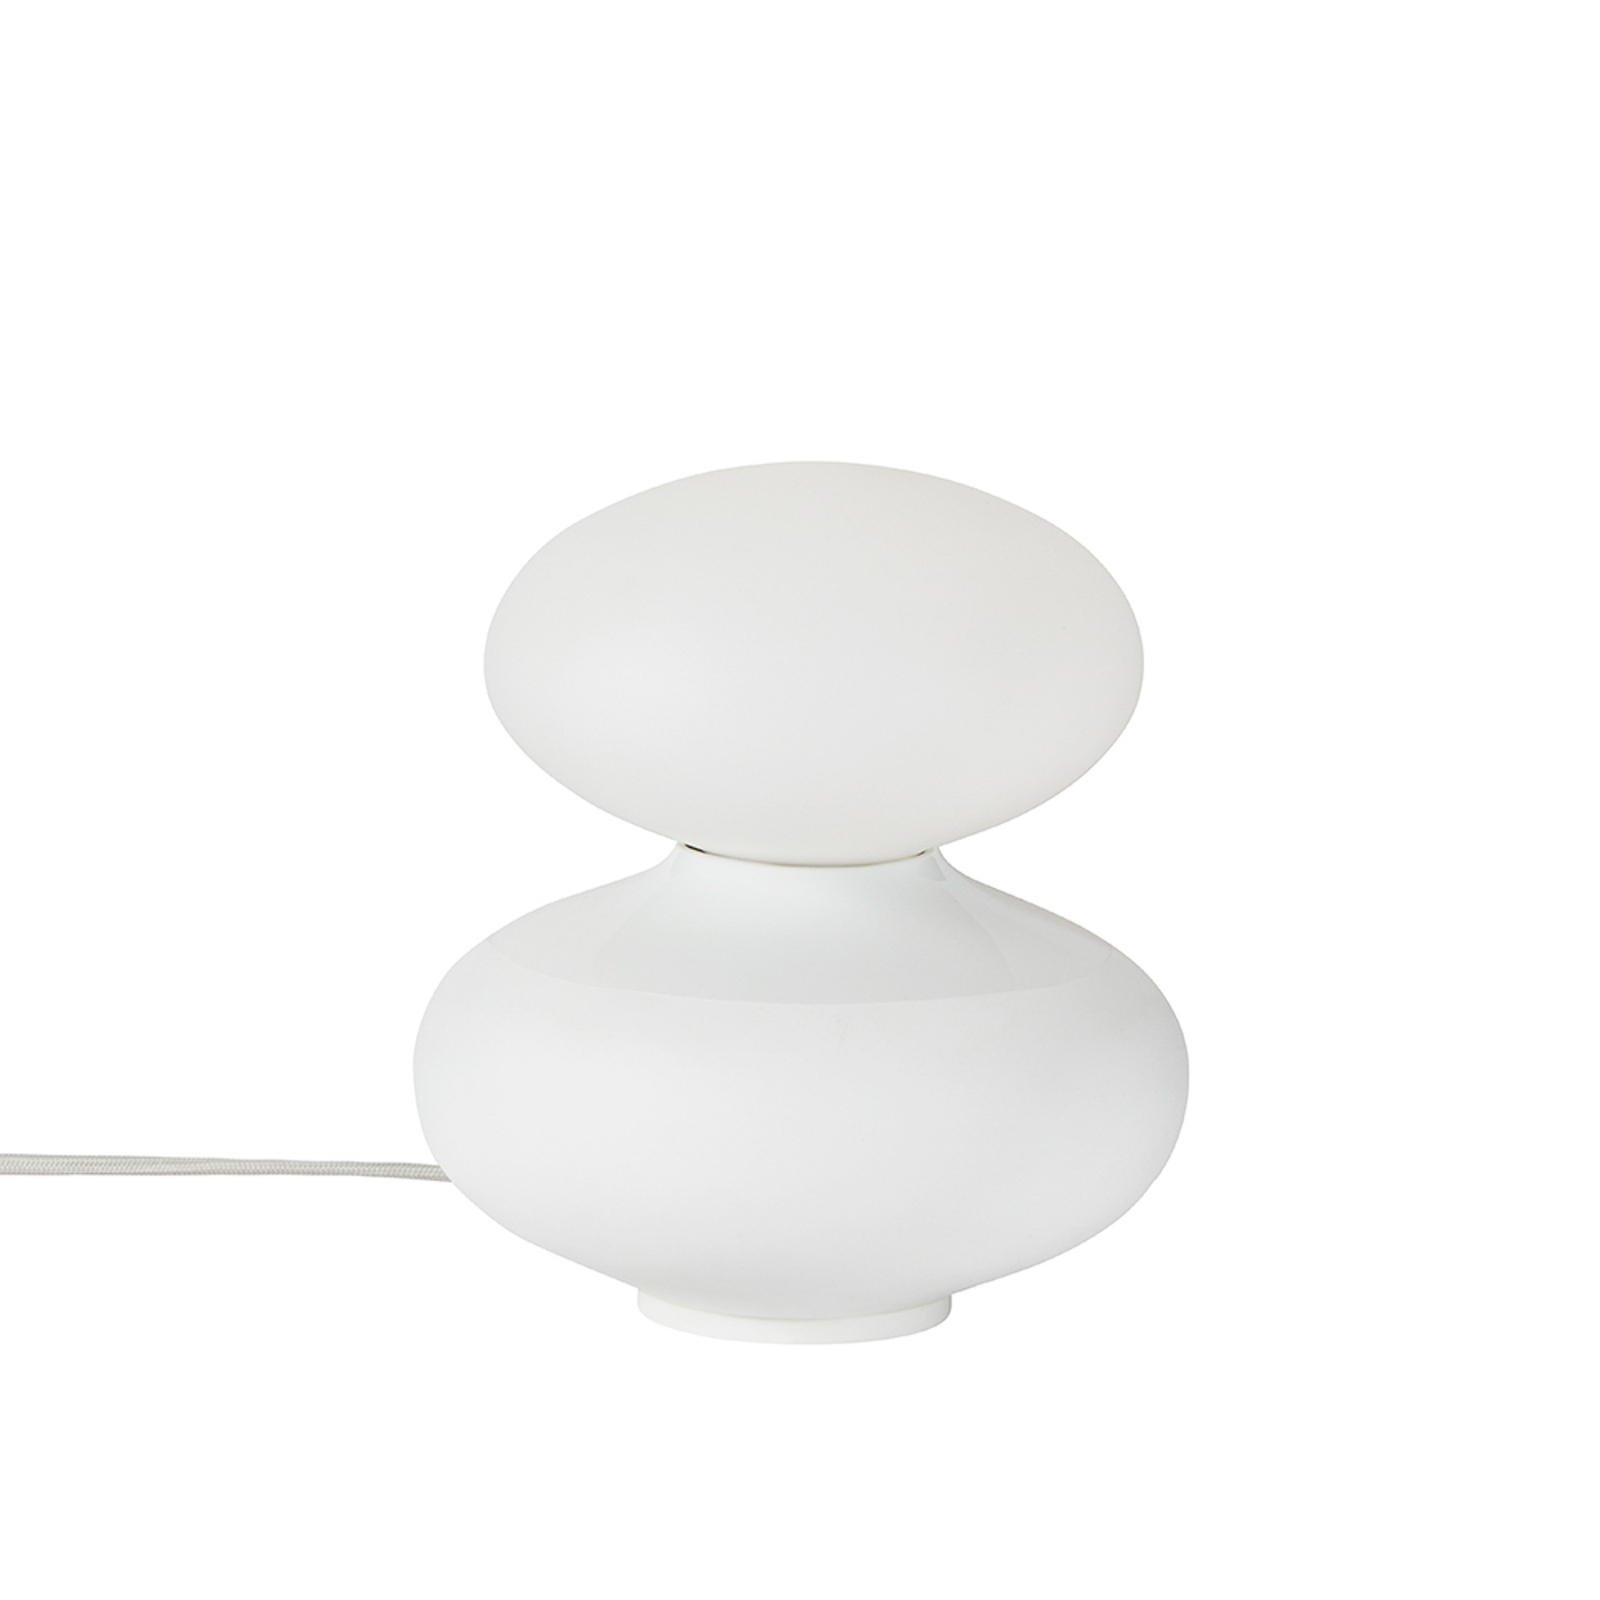 Tala lampe à poser Reflection Oval, design David Weeks